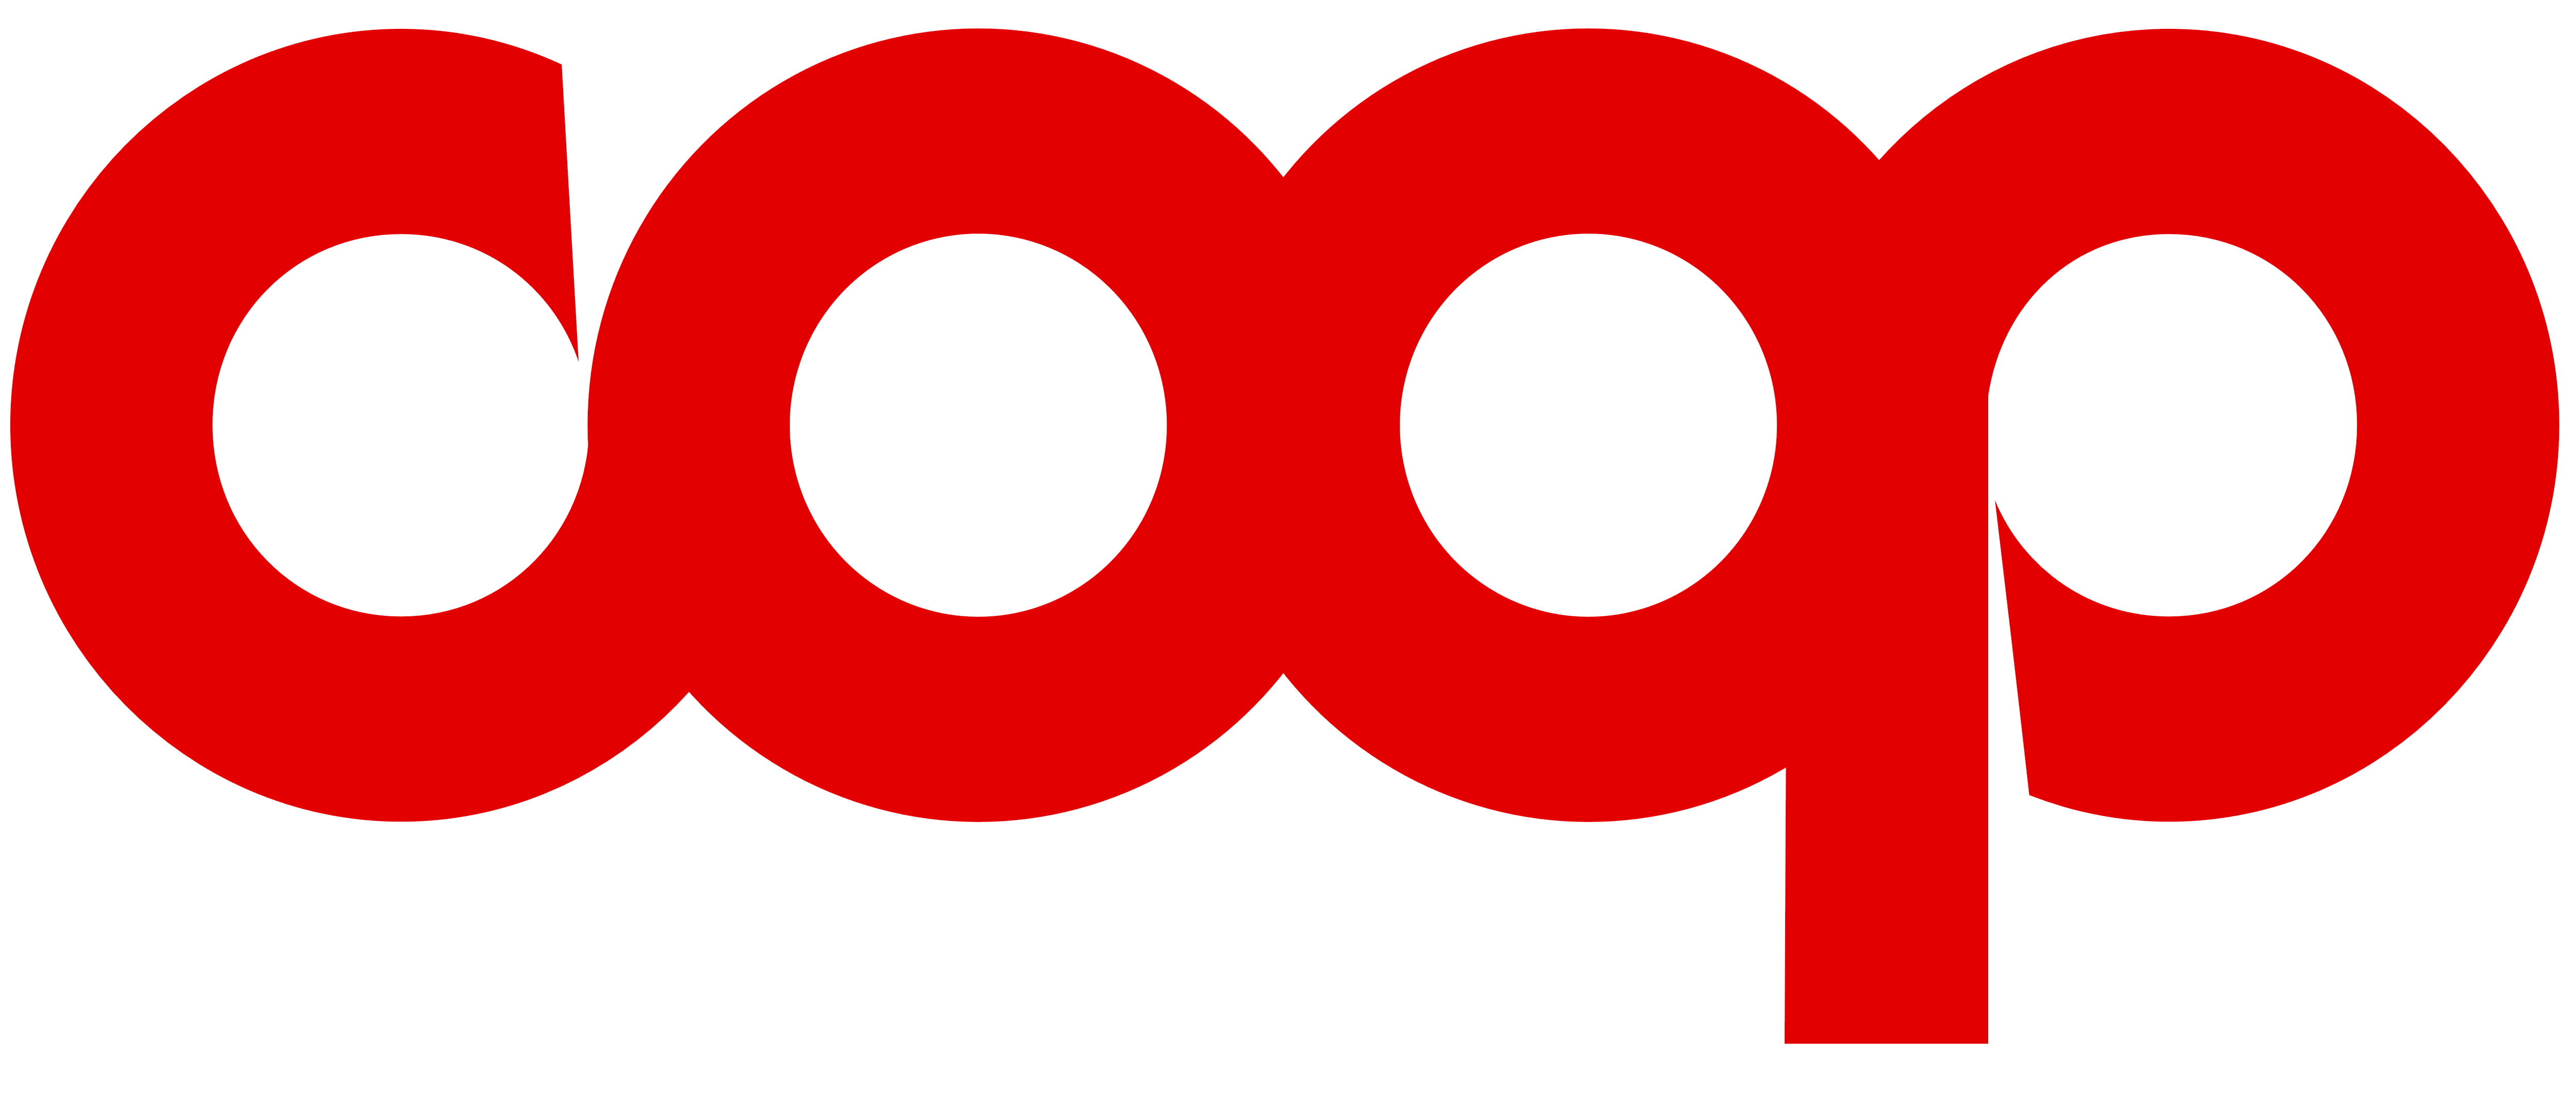 Coop – Logos Download